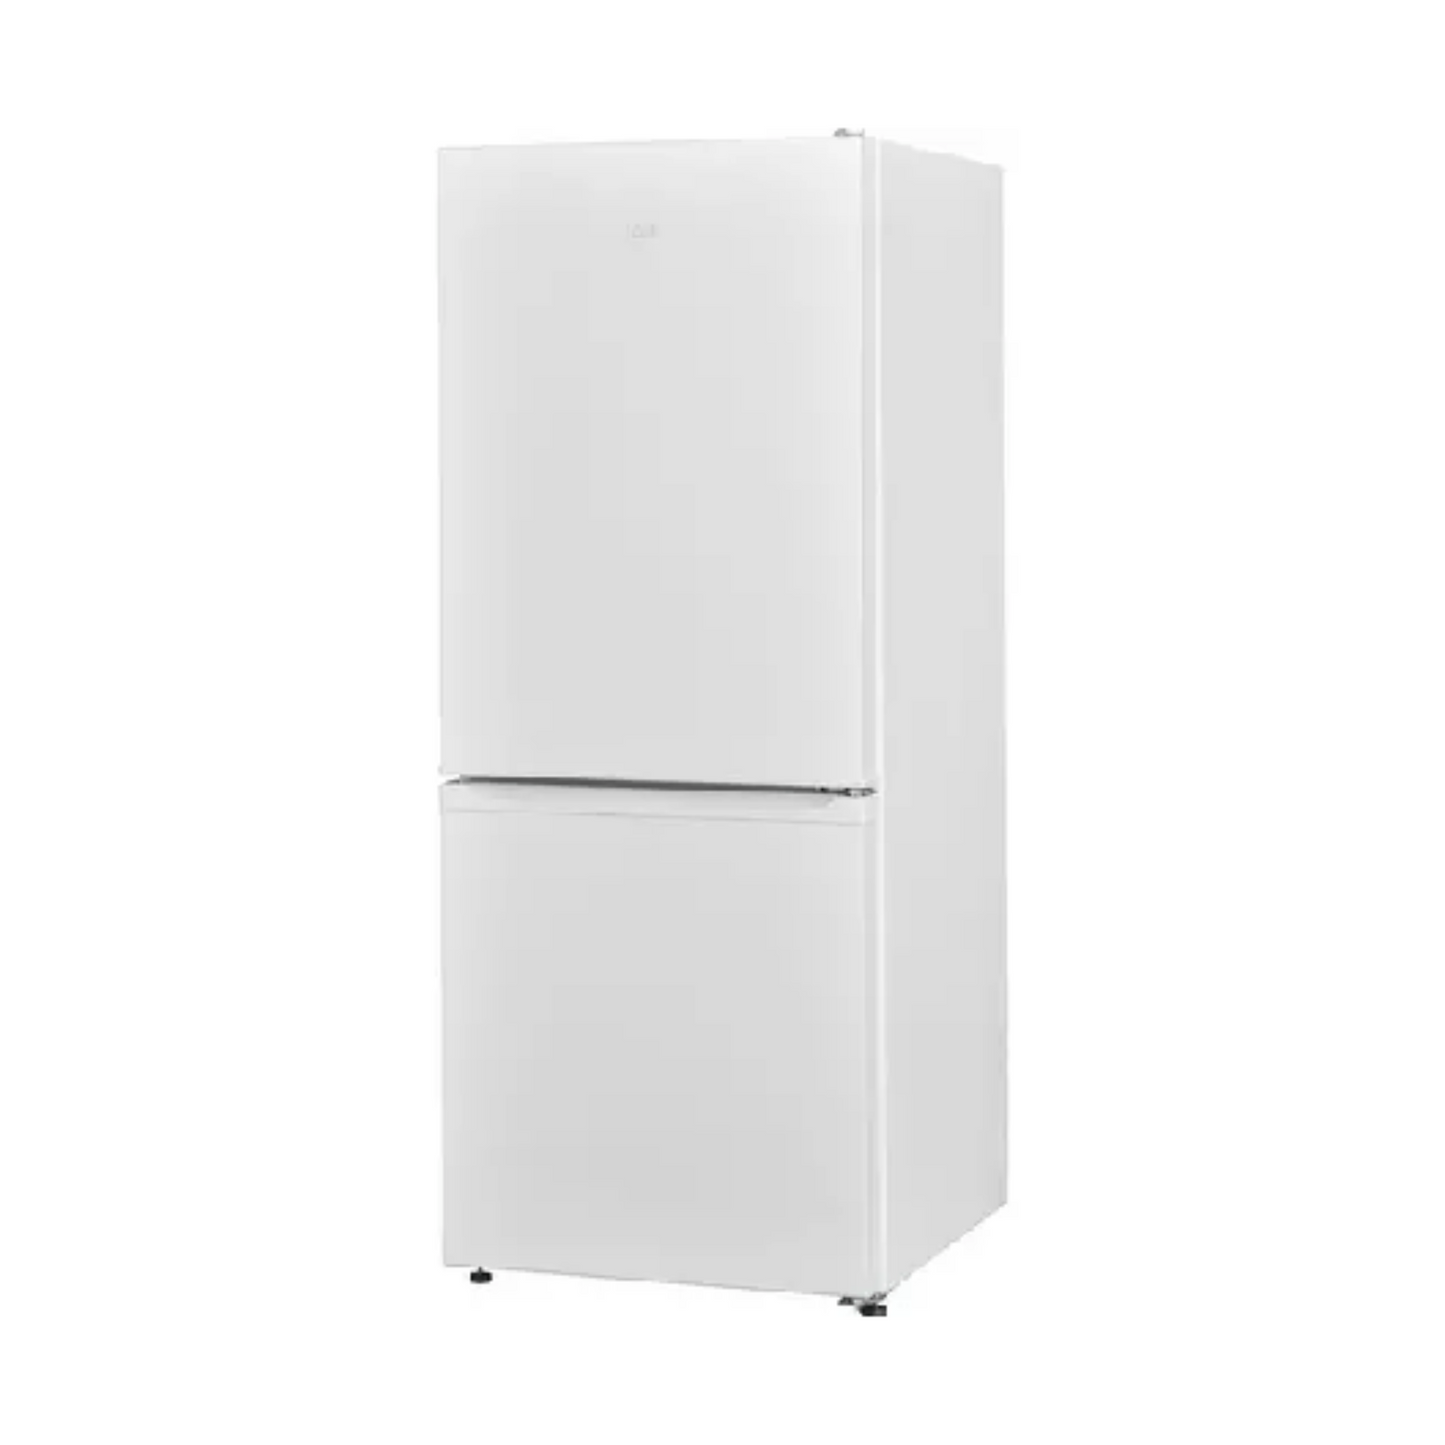 Logik 201L Double Door Refrigerator, LE55CW22